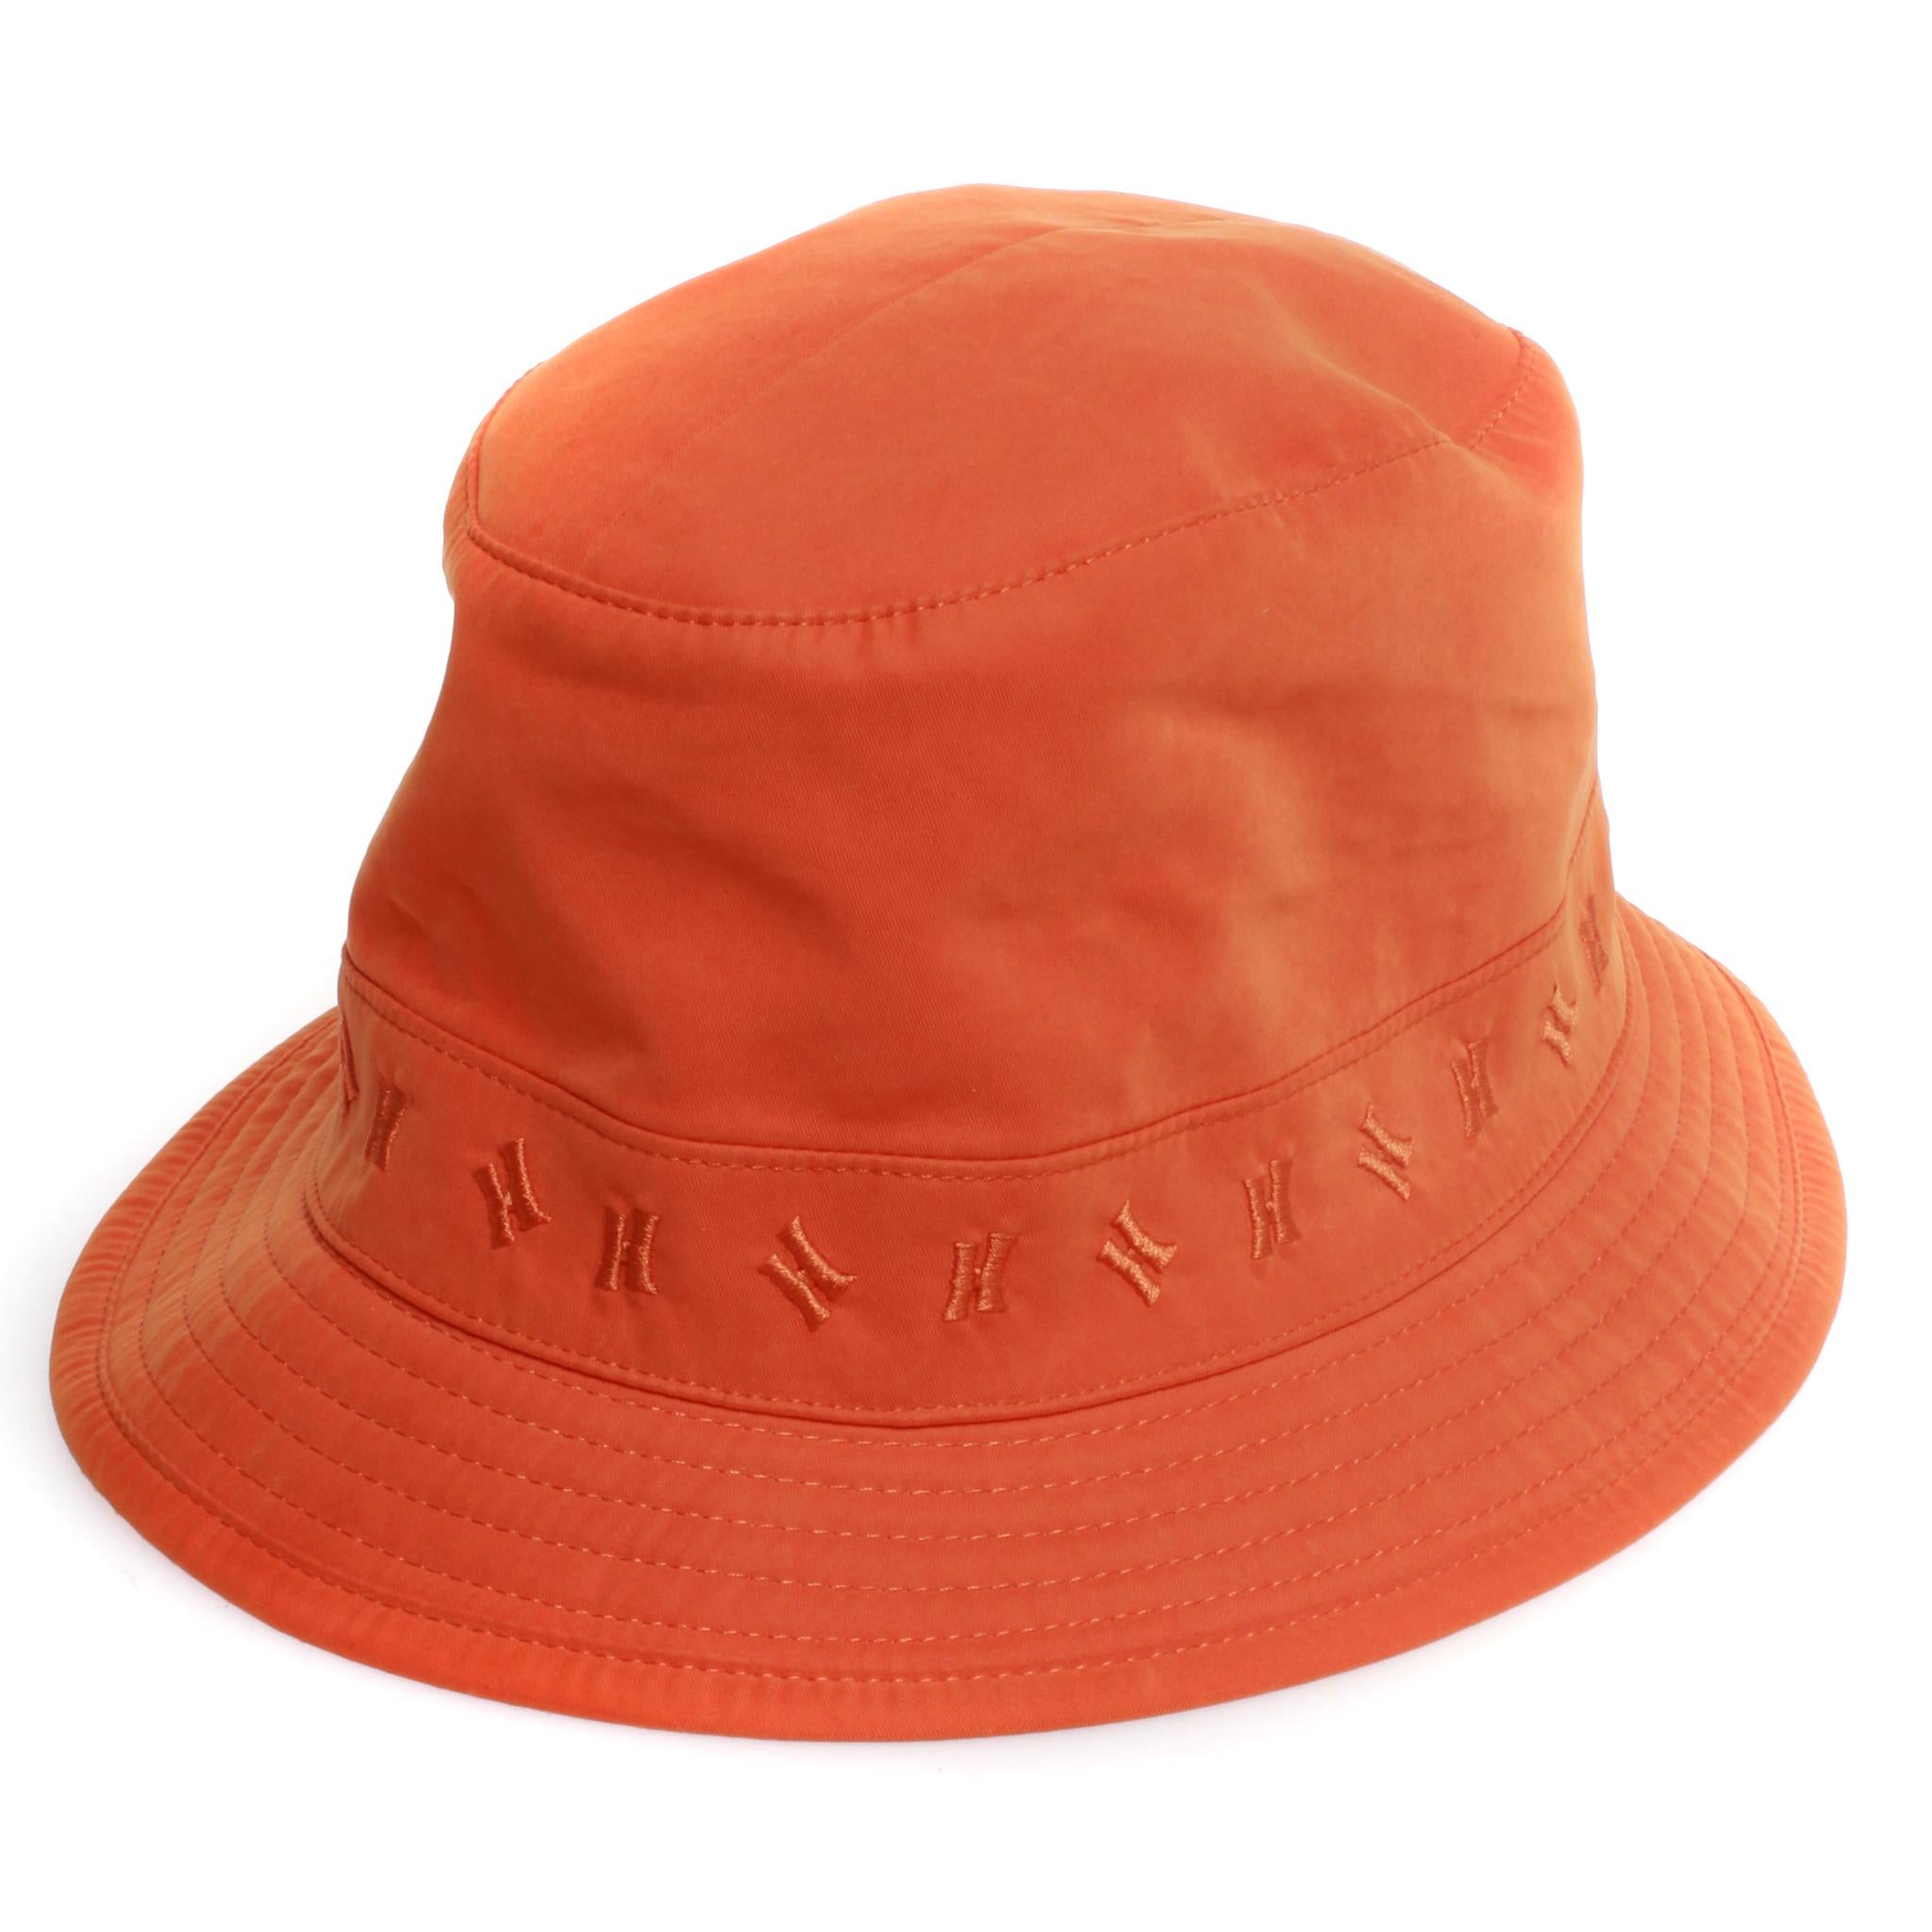 hermes orange hat